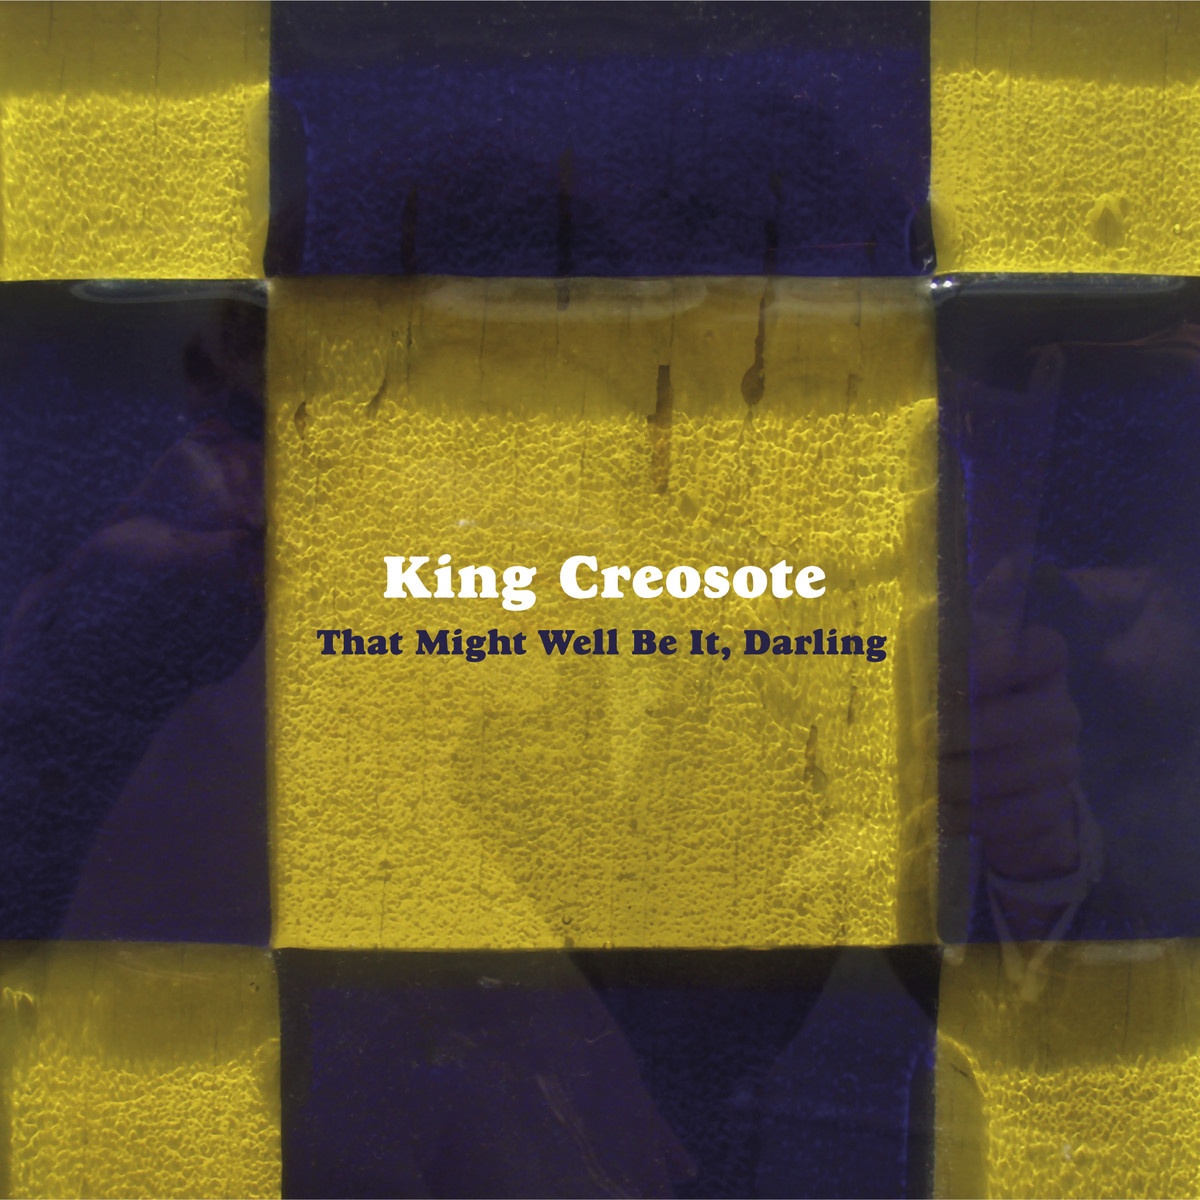 King Creosote - Little Man картинки